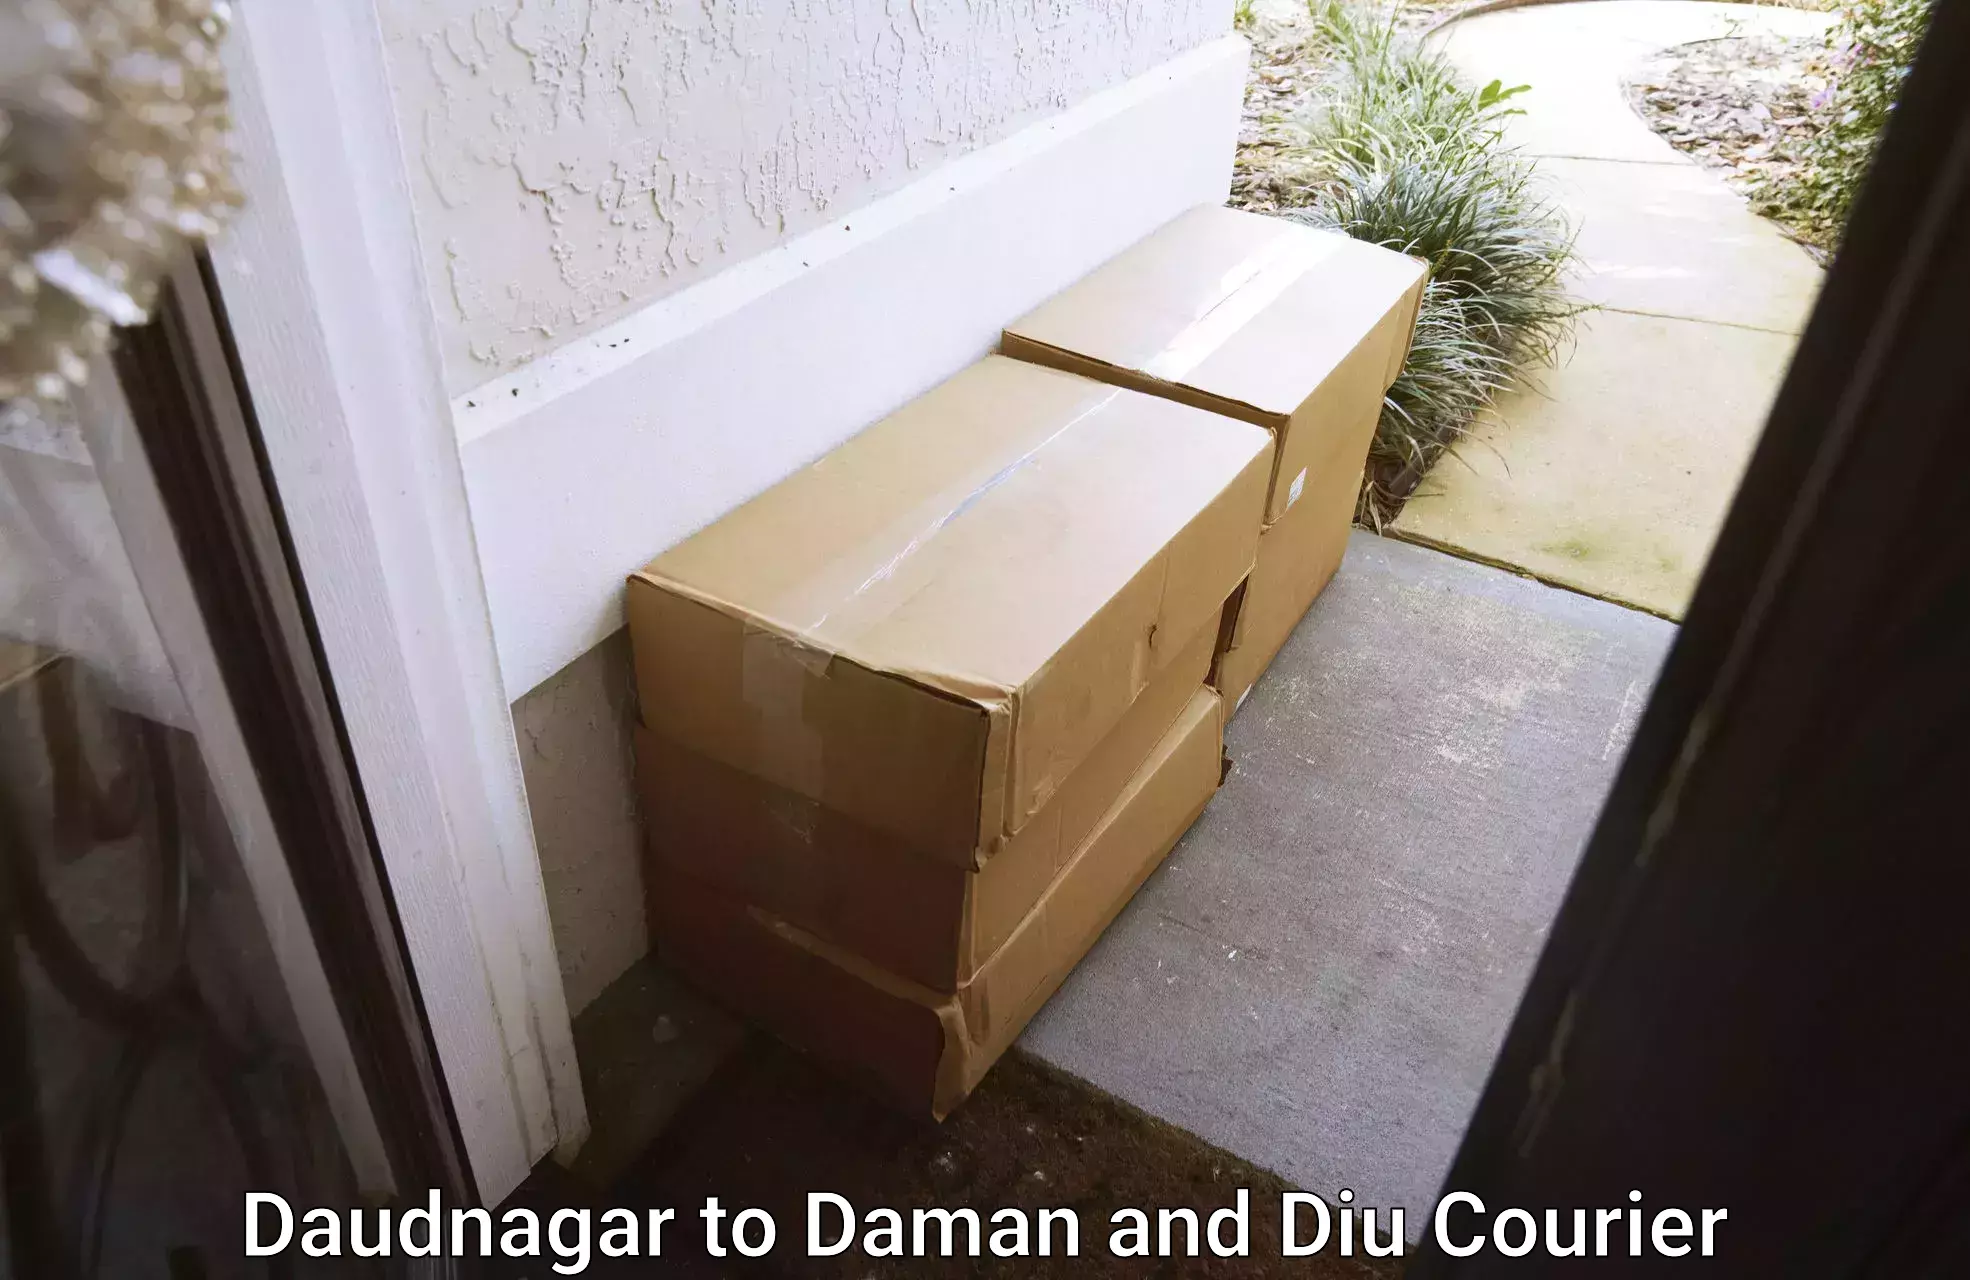 Professional packing services Daudnagar to Daman